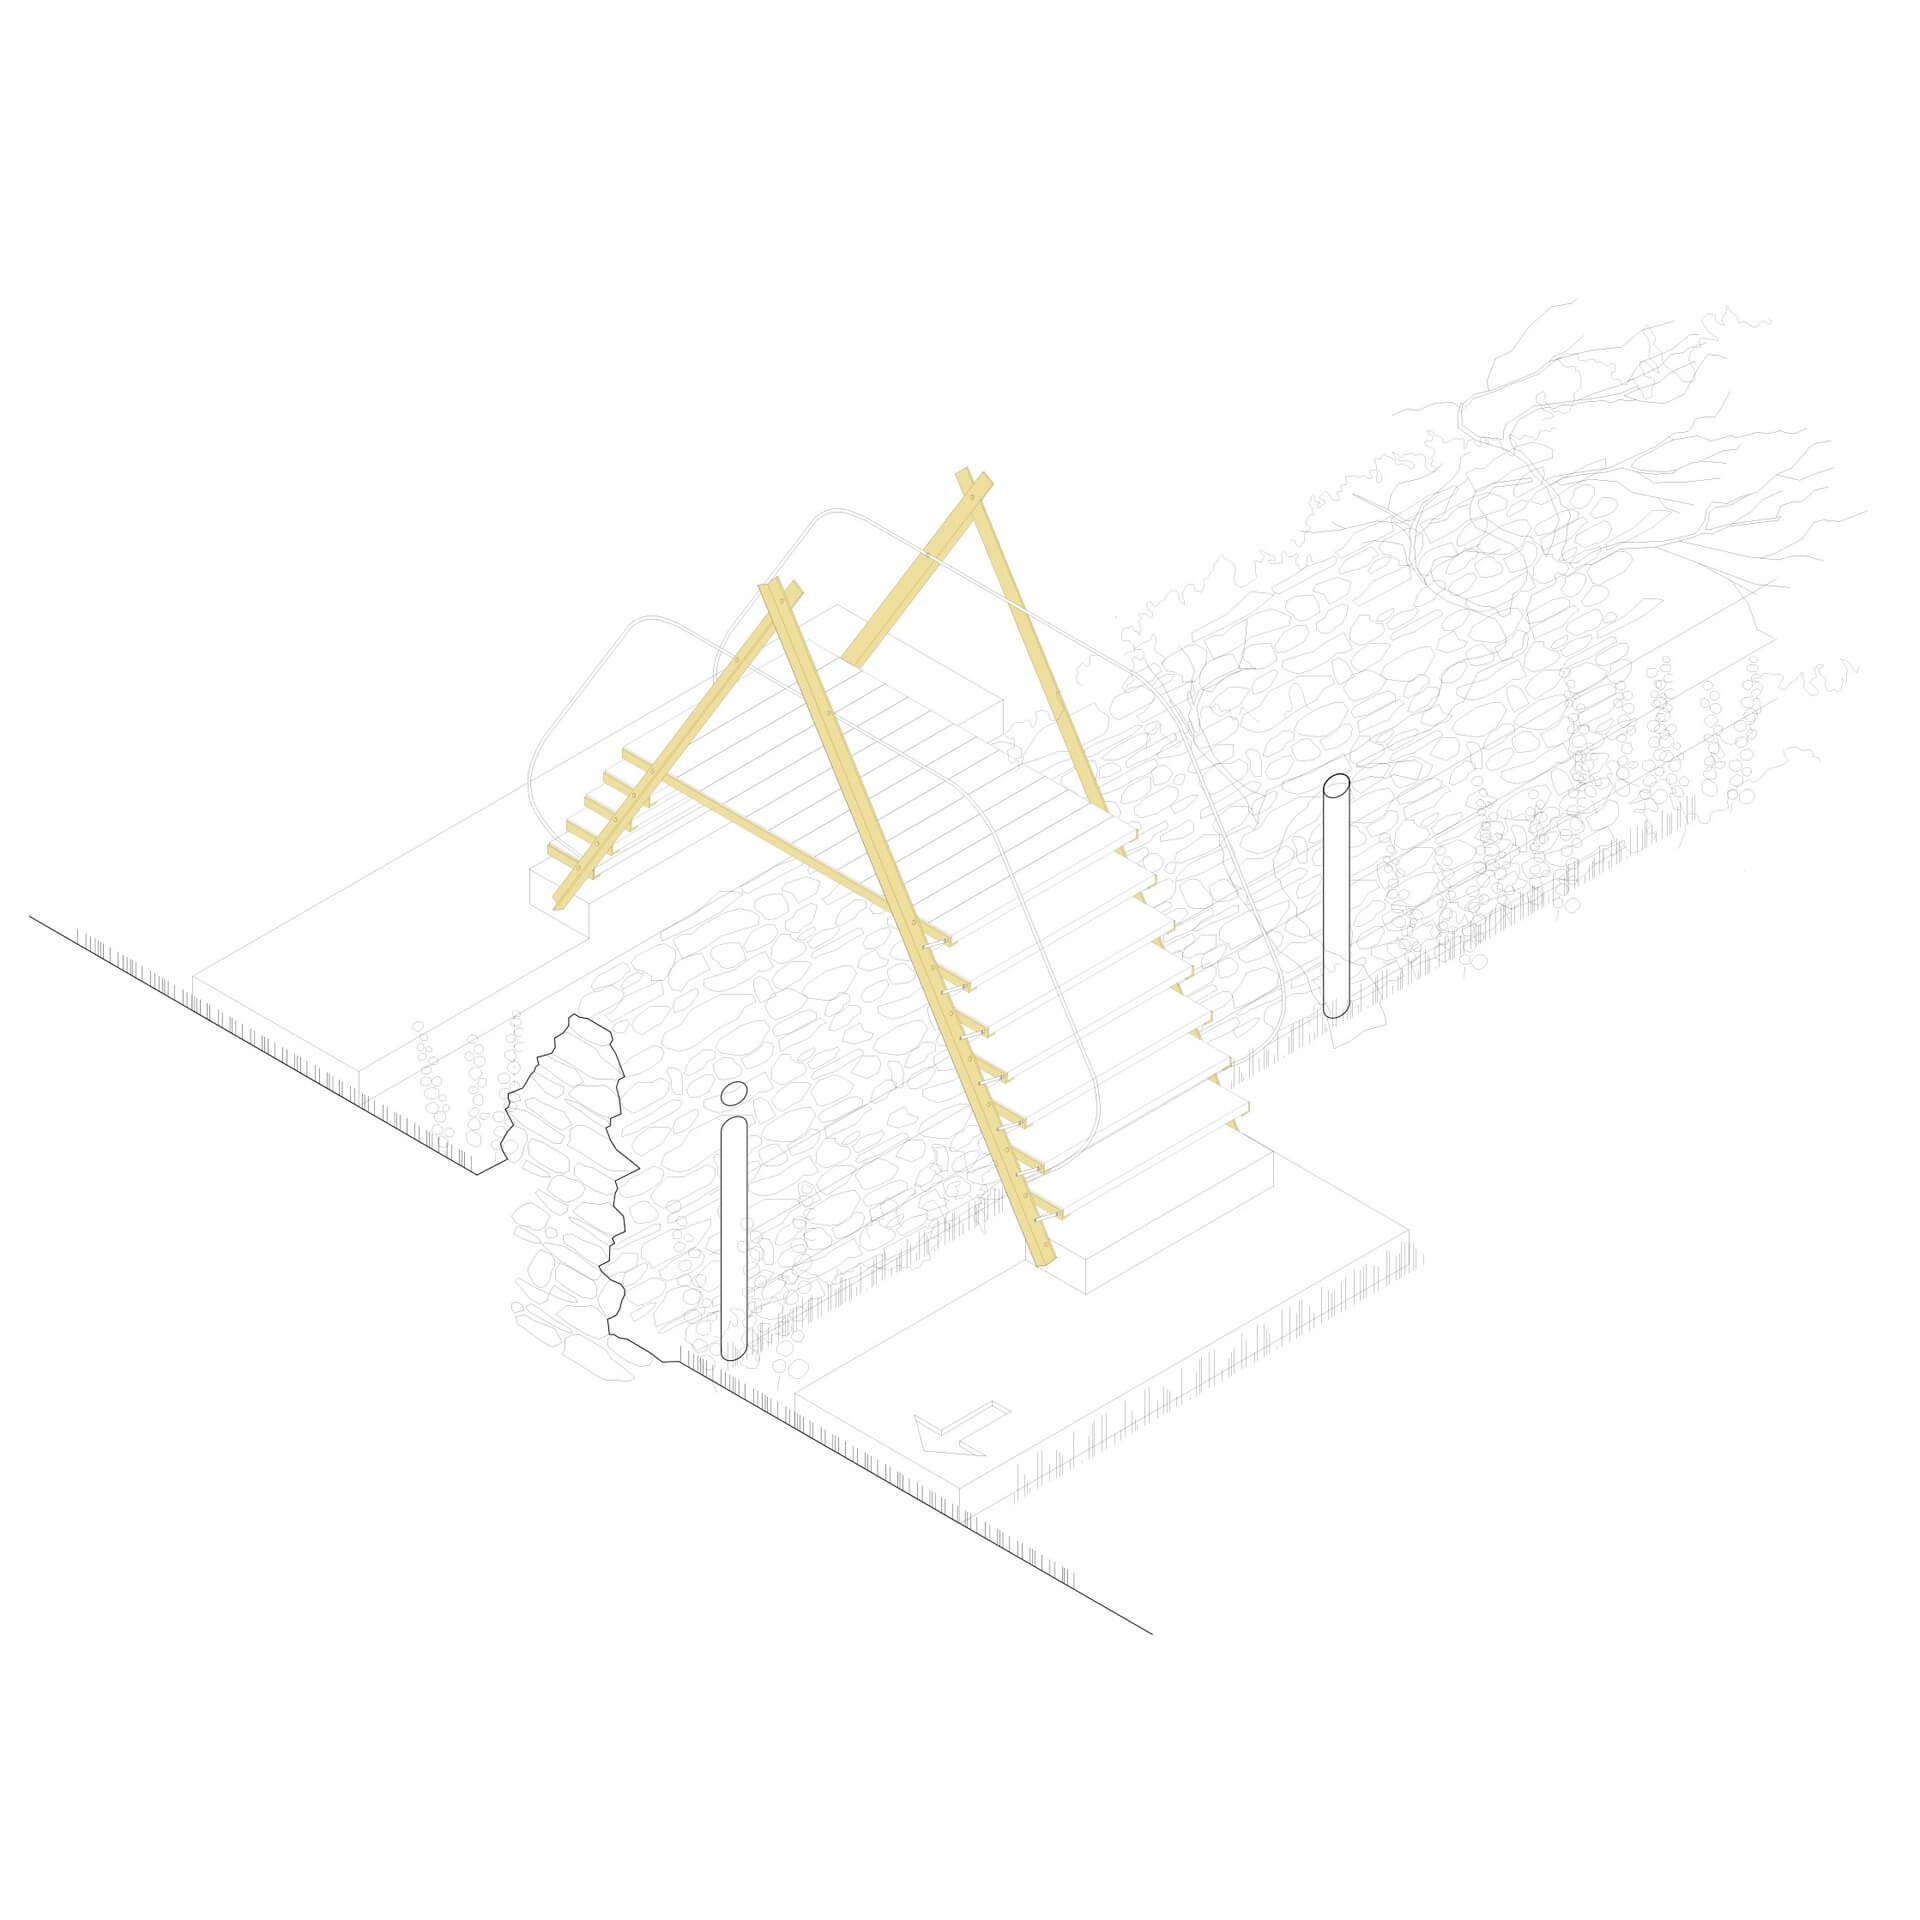 Steve Larkin Architects - Rathcroghan 07 WP1 Appendix WP1_7